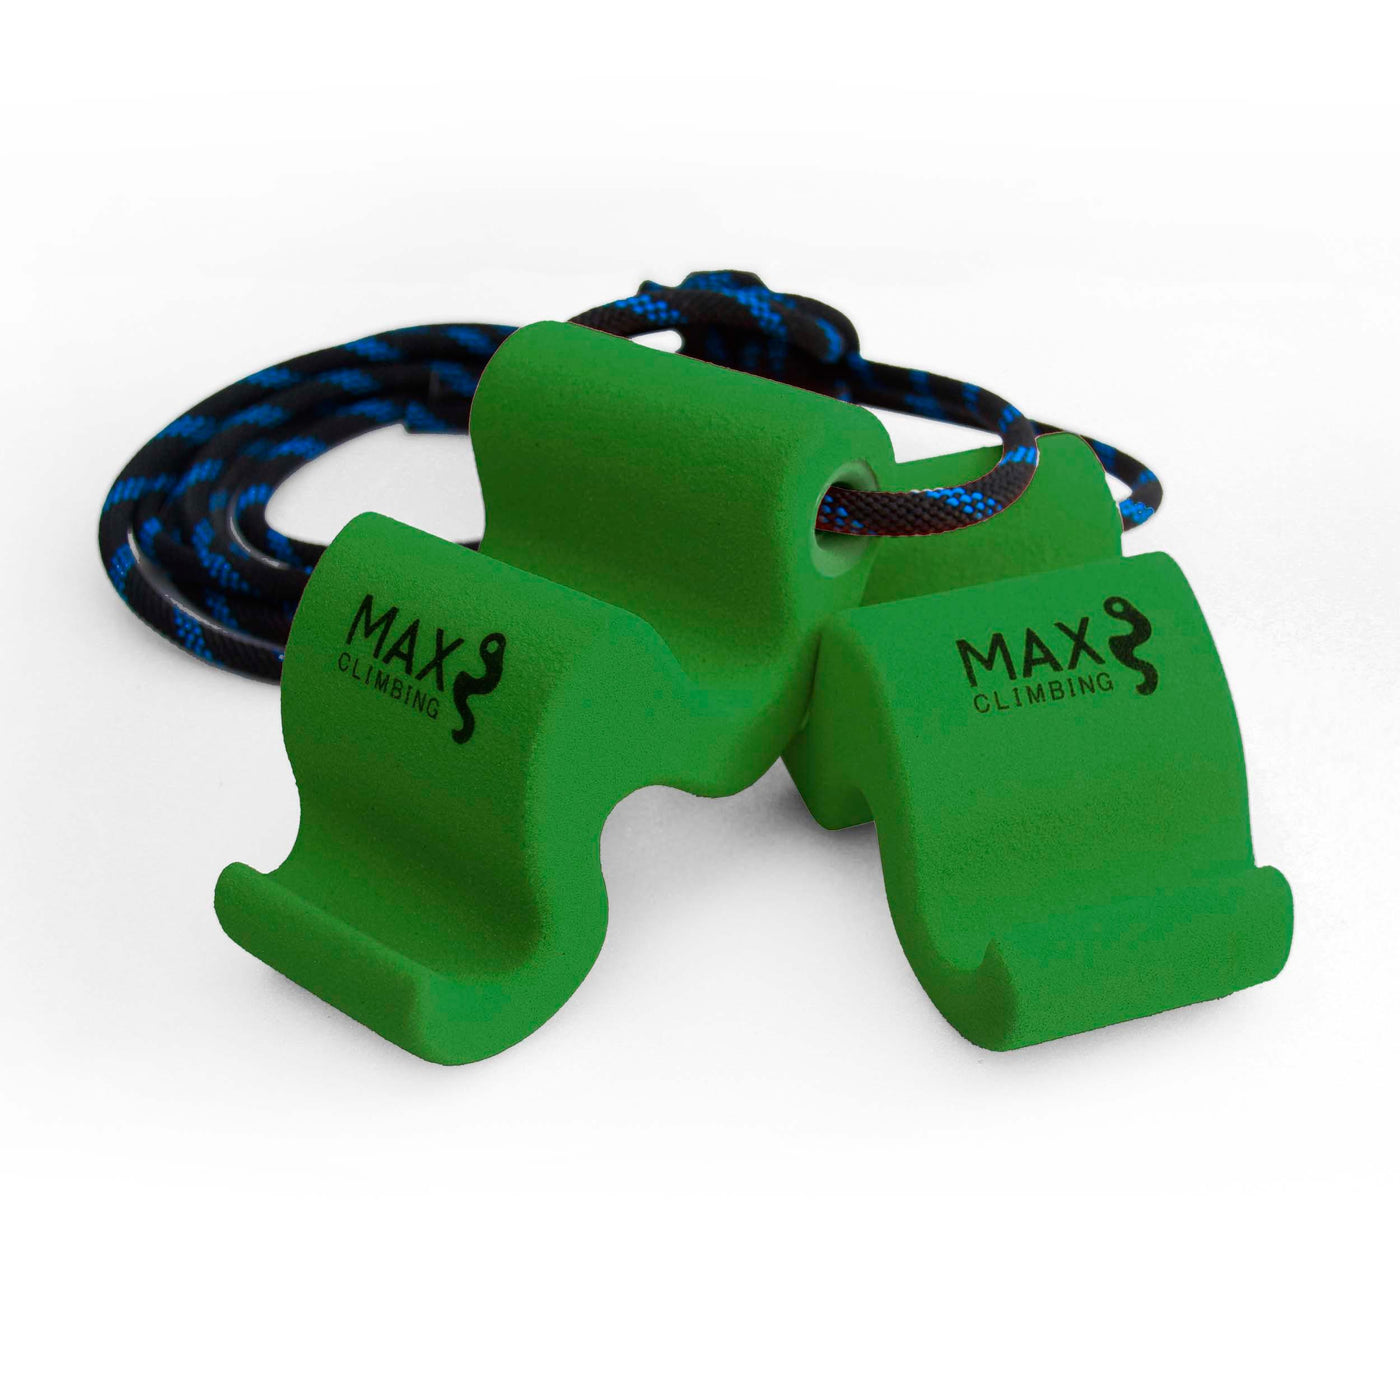 Maxgrip - Max Climbing - training tool - climbing green